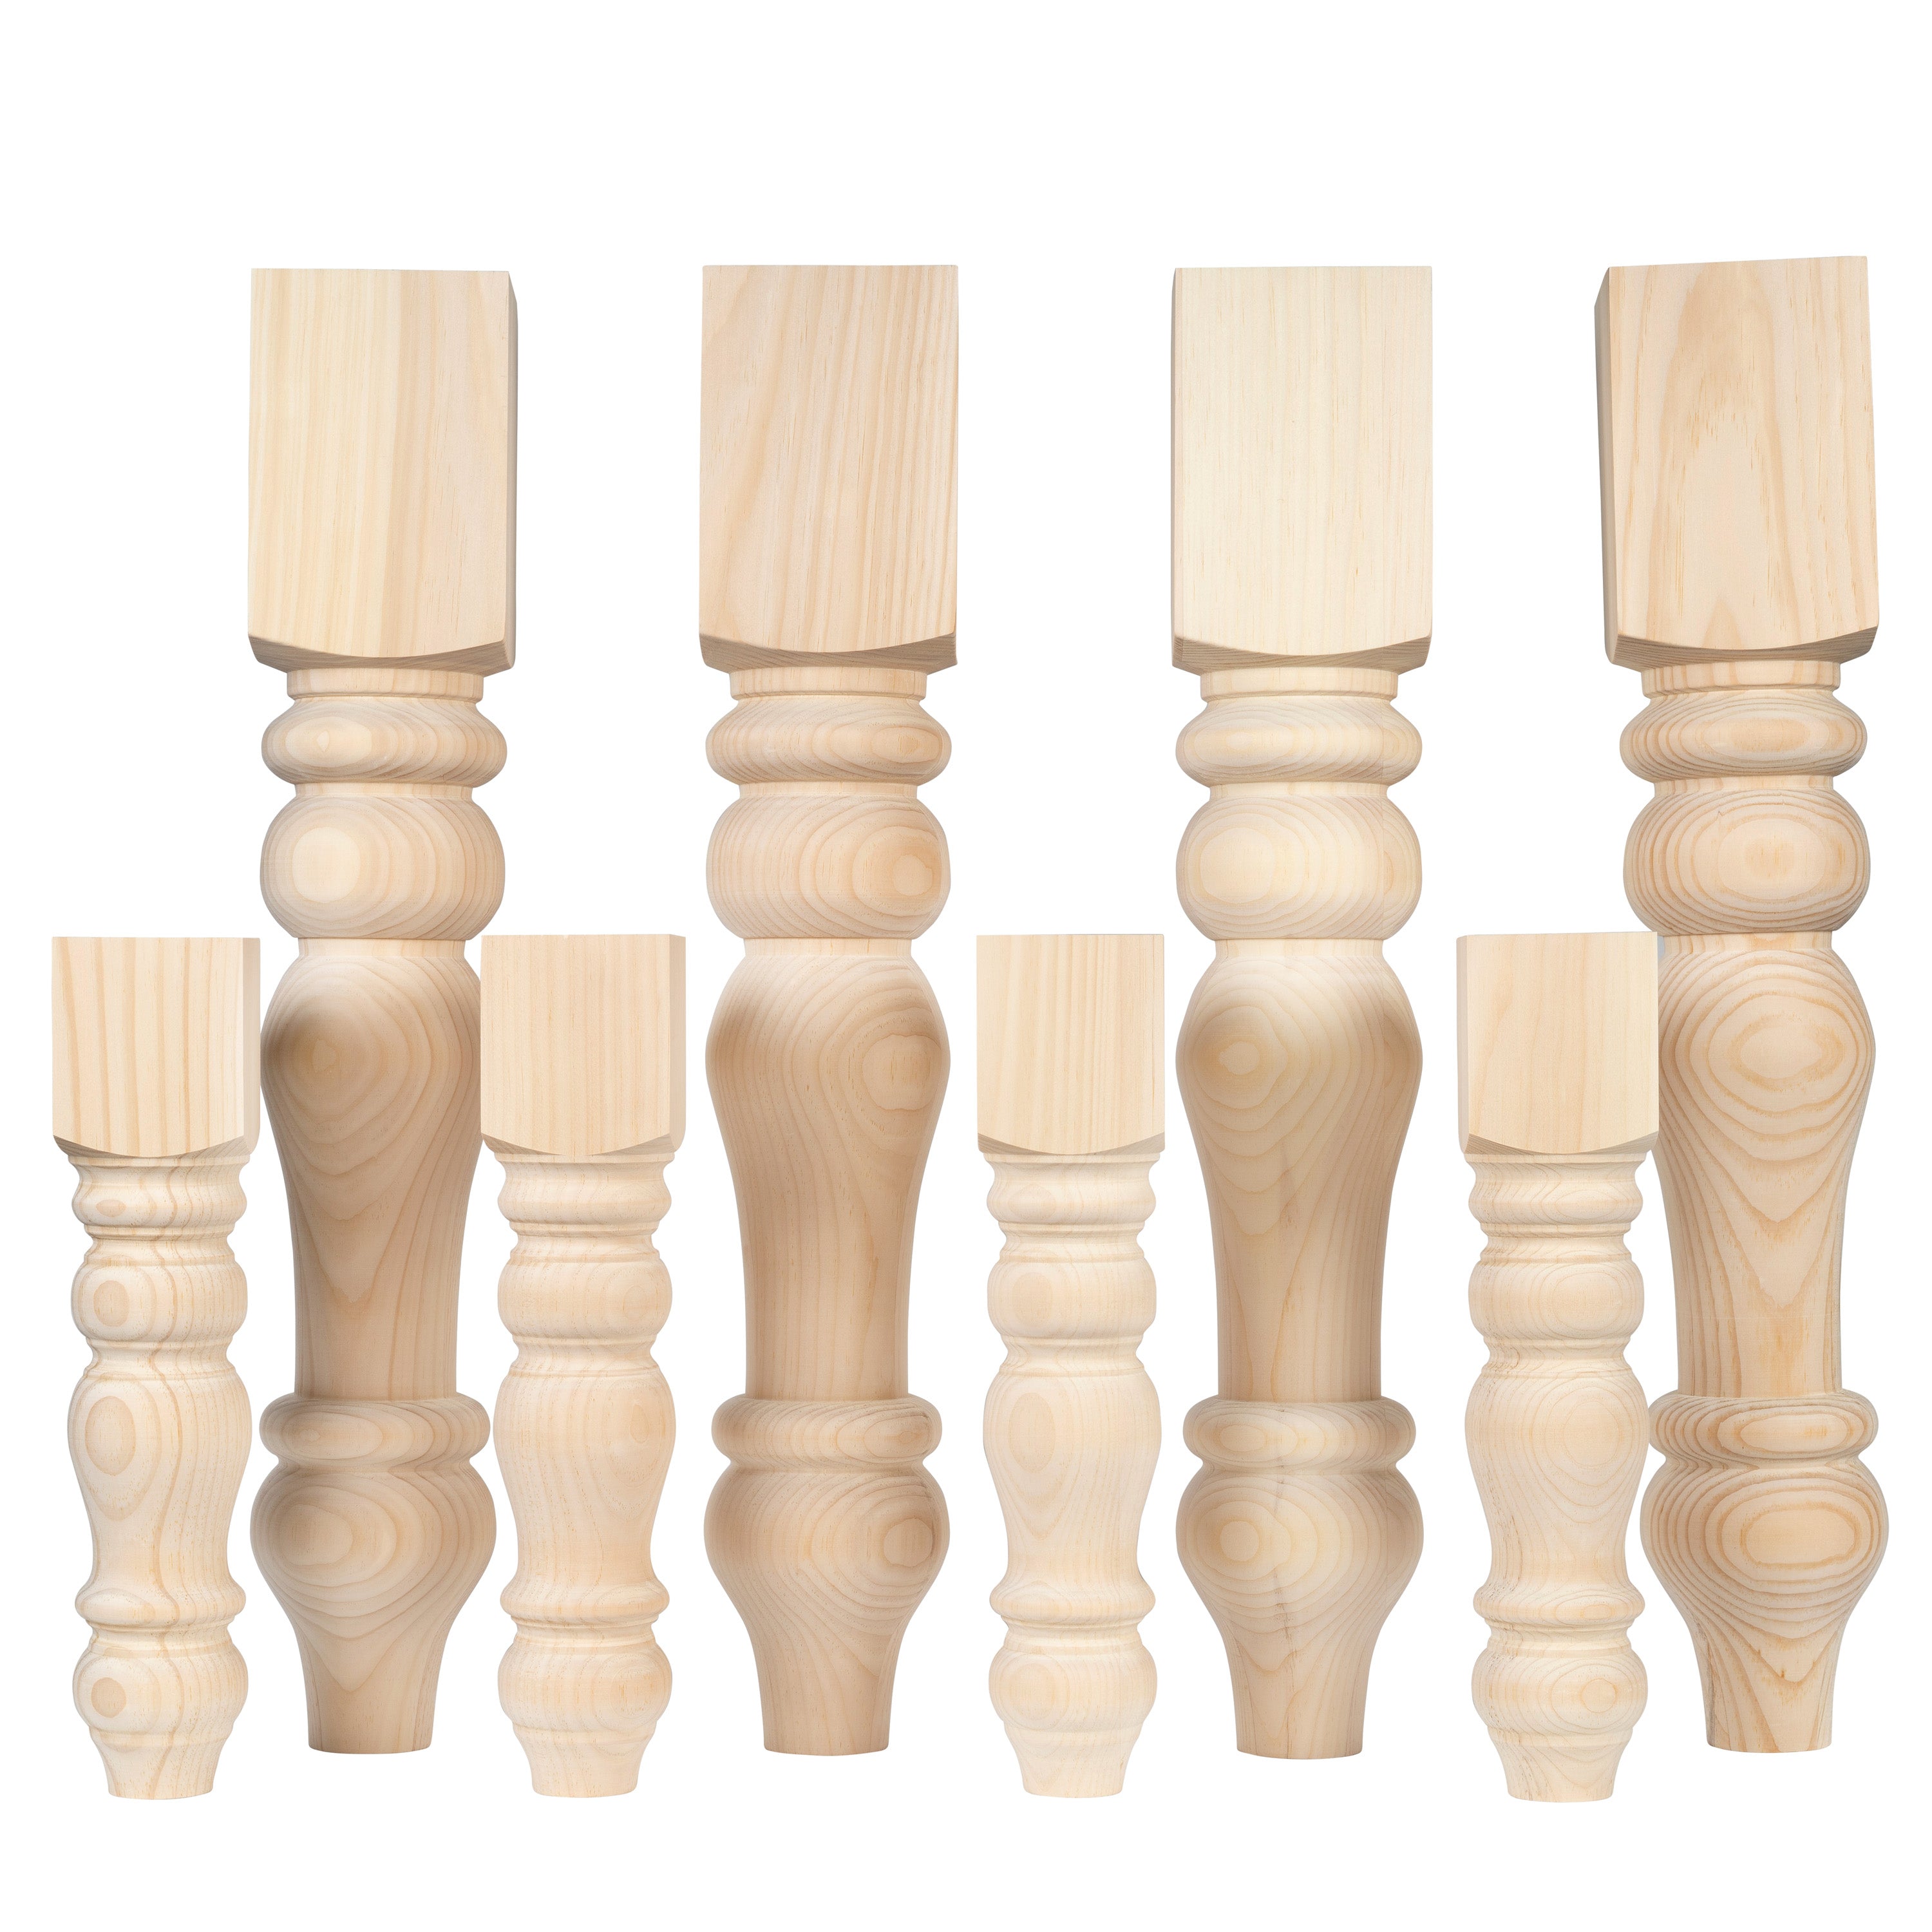 Pine Farmhouse Wooden Table & Bench Legs Combo by Carolina Leg Co